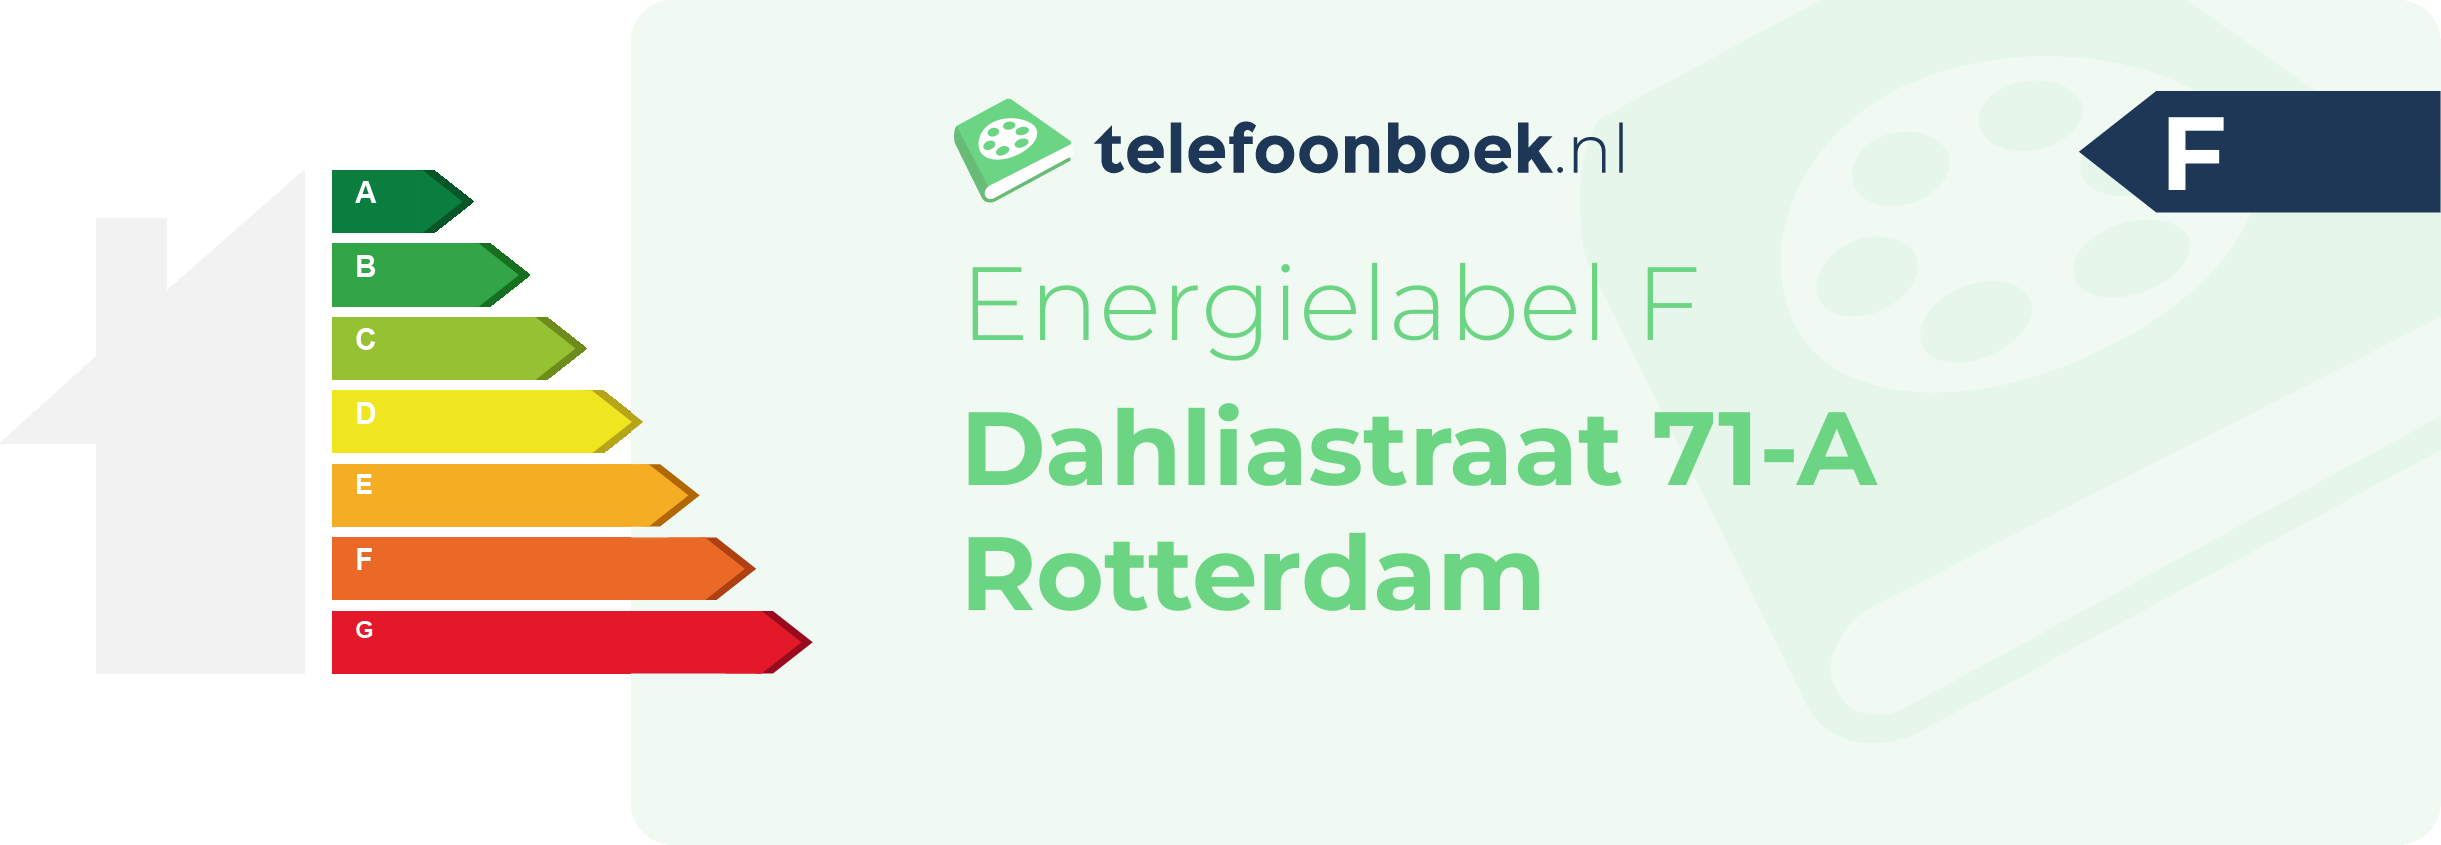 Energielabel Dahliastraat 71-A Rotterdam